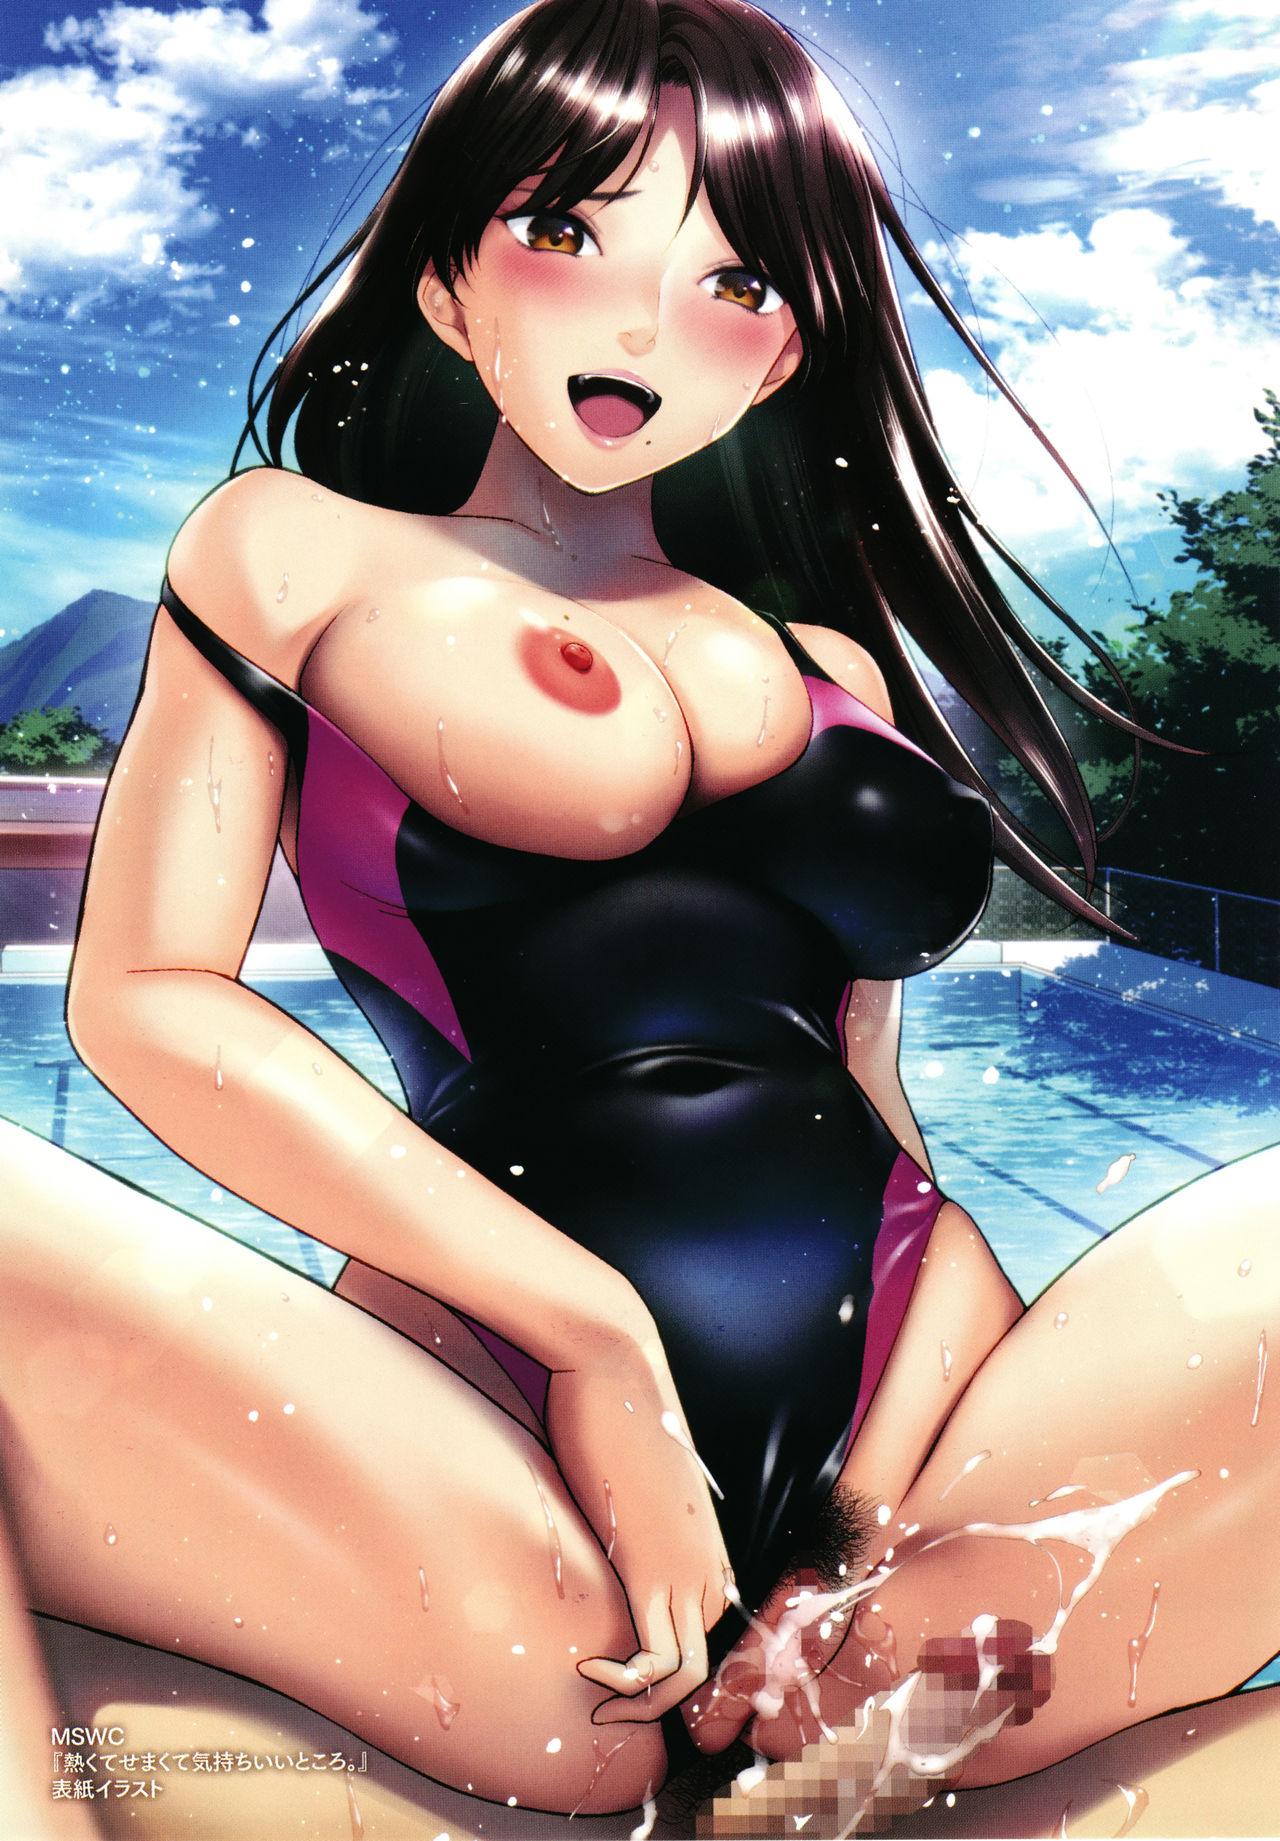 Bathing suit hentai